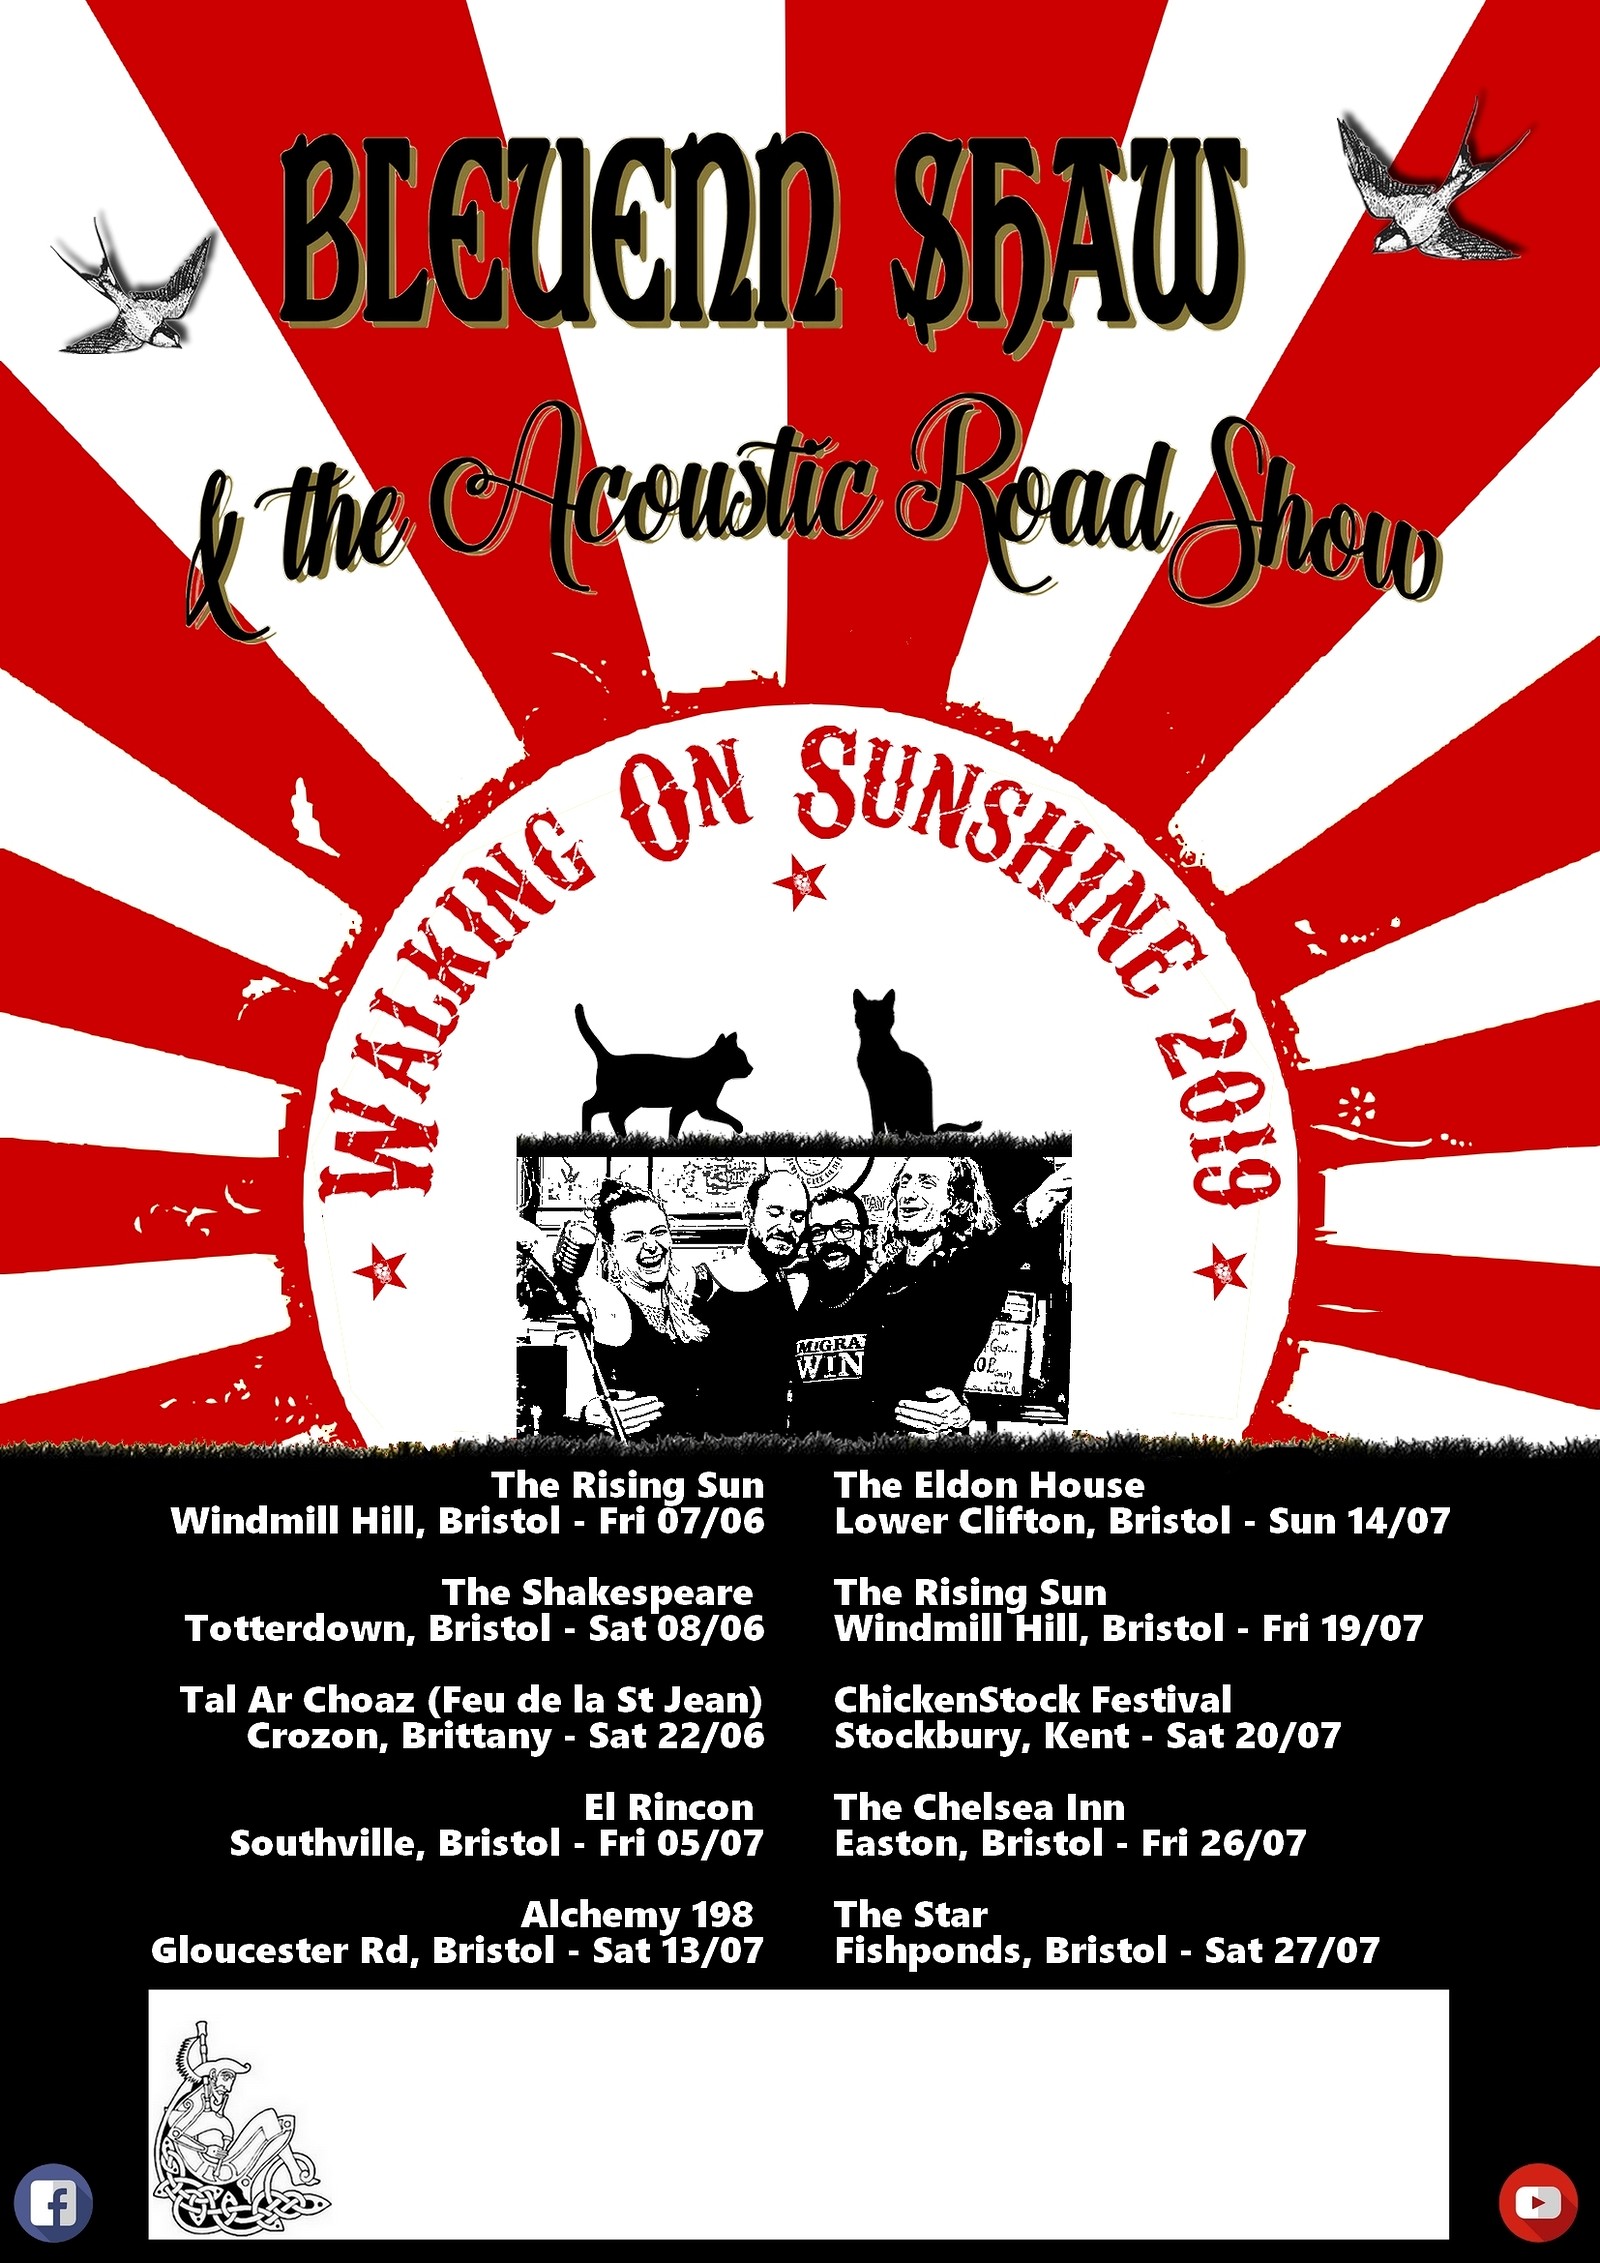 Bleuenn Shaw & The Acoustic RoadShow @ Rising Sun at The Rising Sun